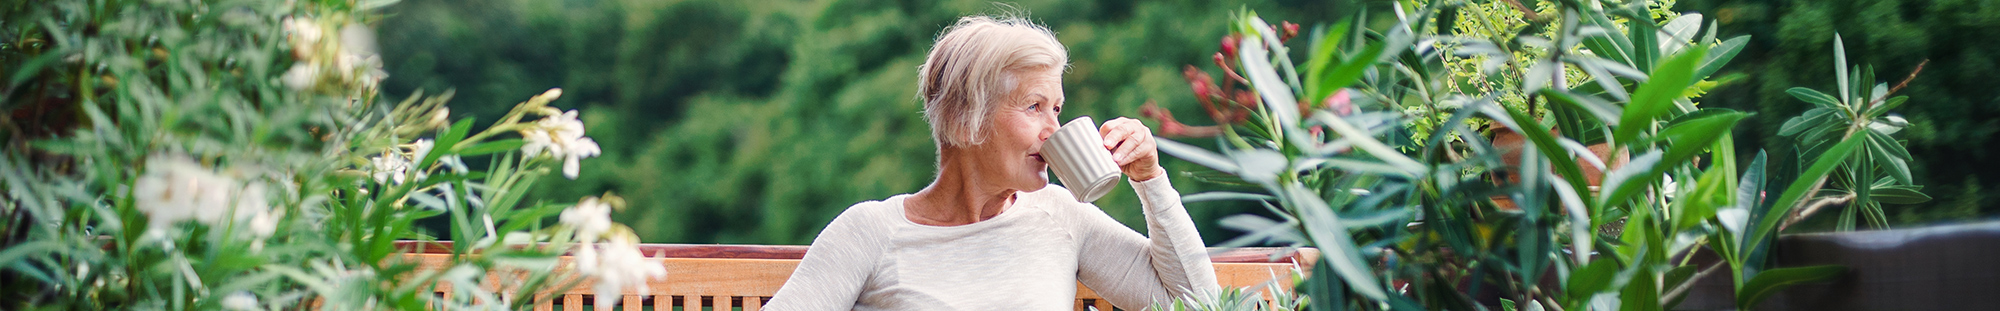 an older woman drinking coffee in a garden